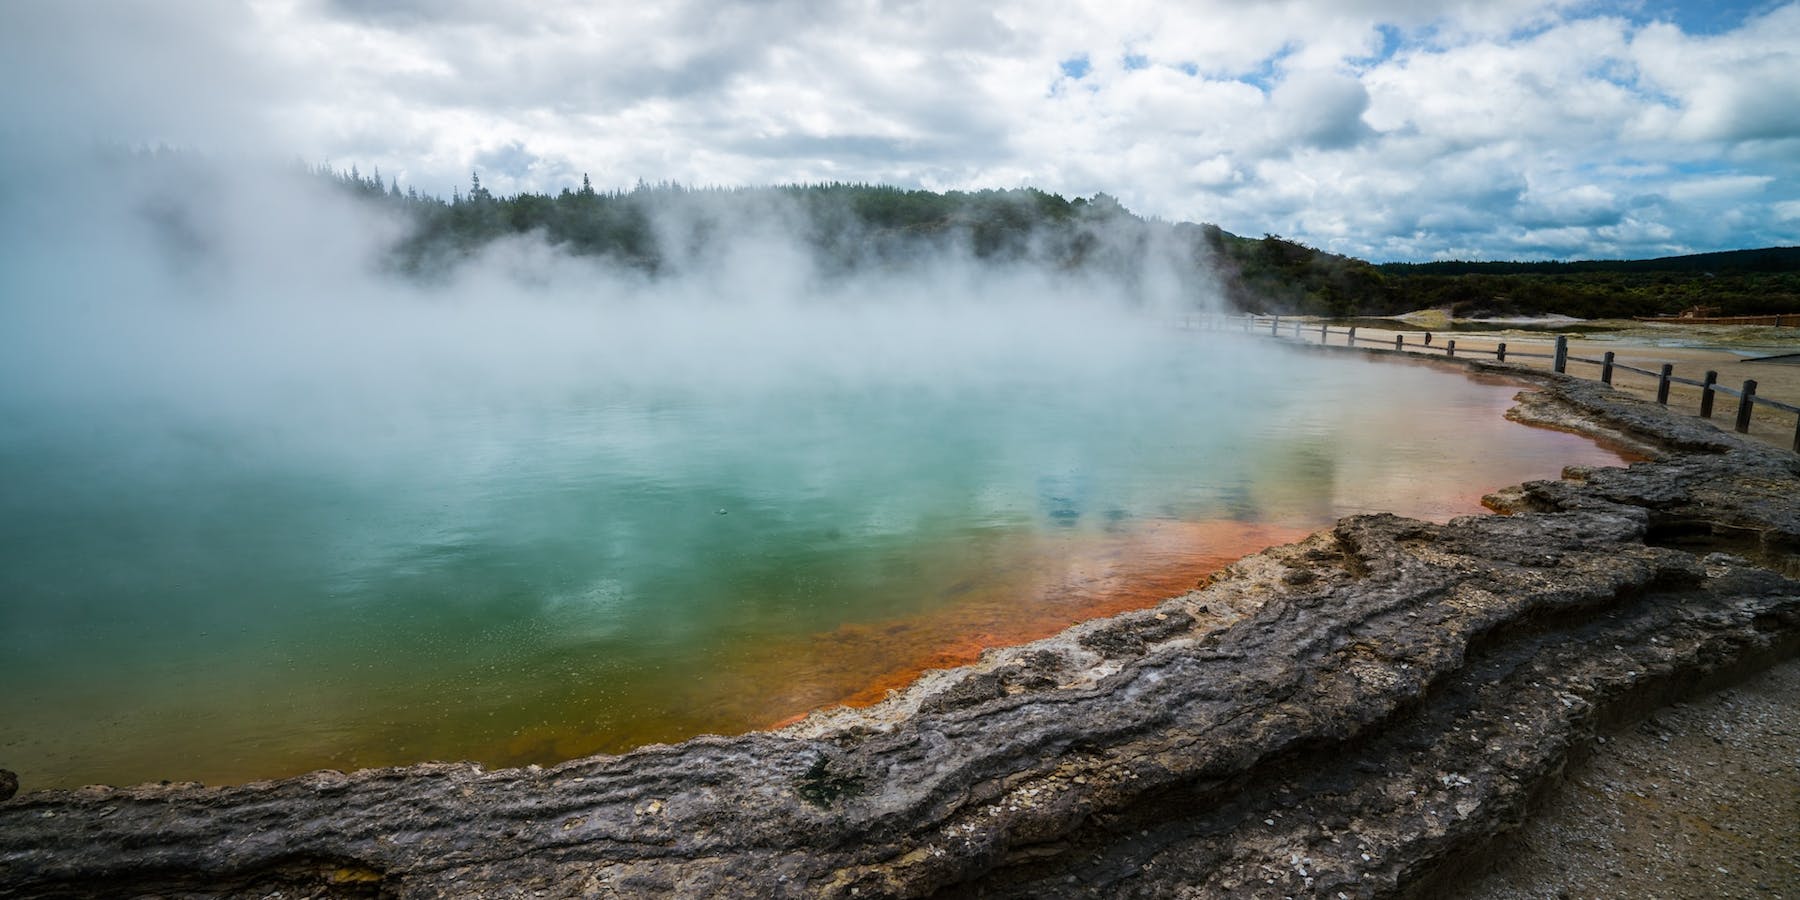 Hot springs in Rotorua, New Zealand